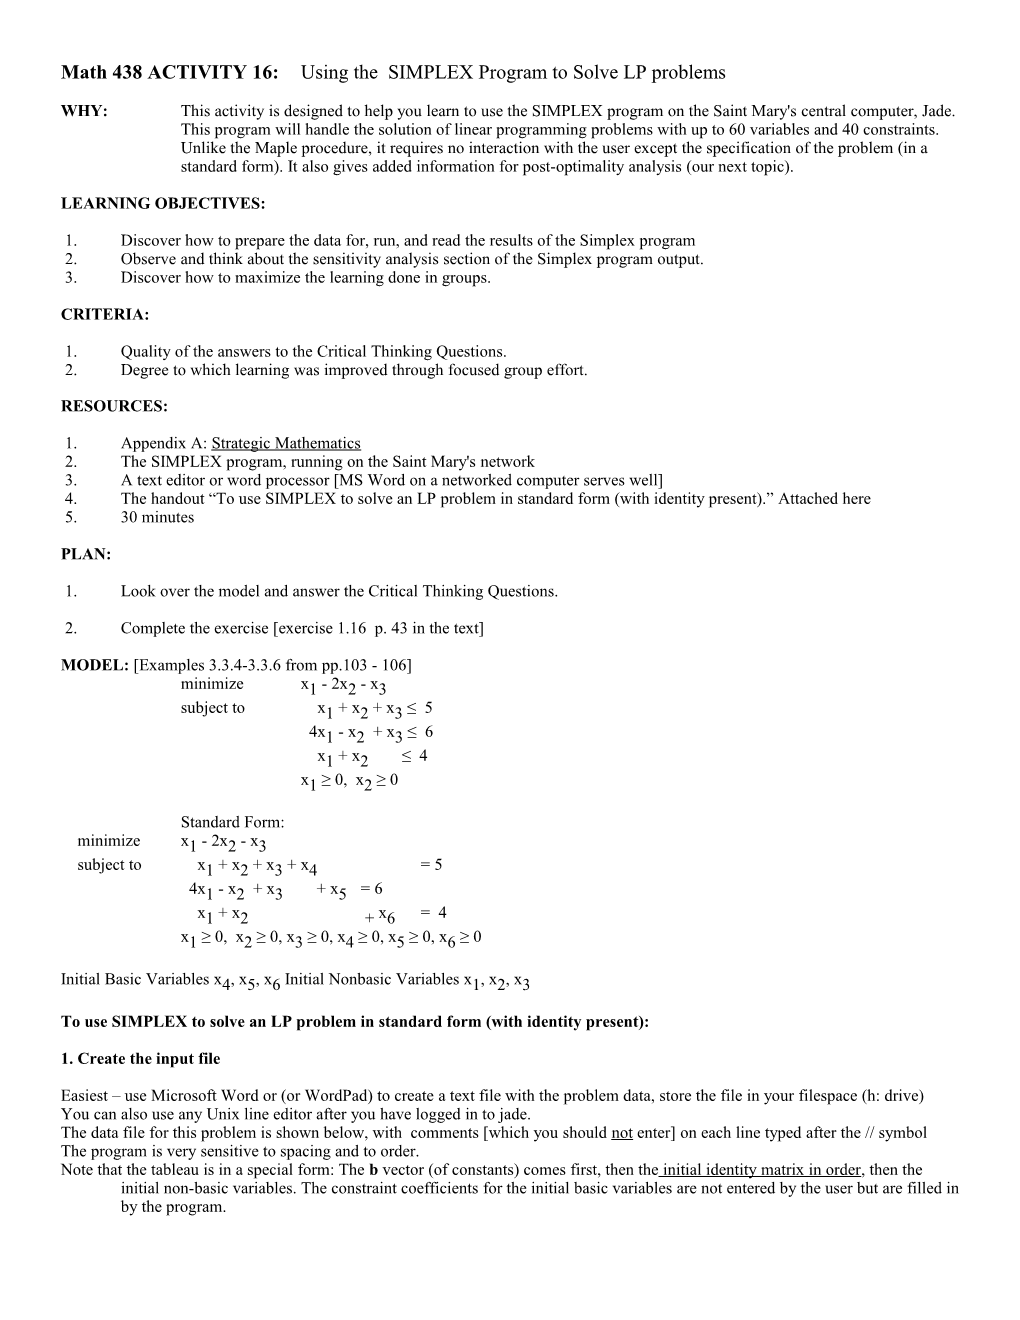 Math 438 ACTIVITY 16: Using the SIMPLEX Program to Solve LP Problems